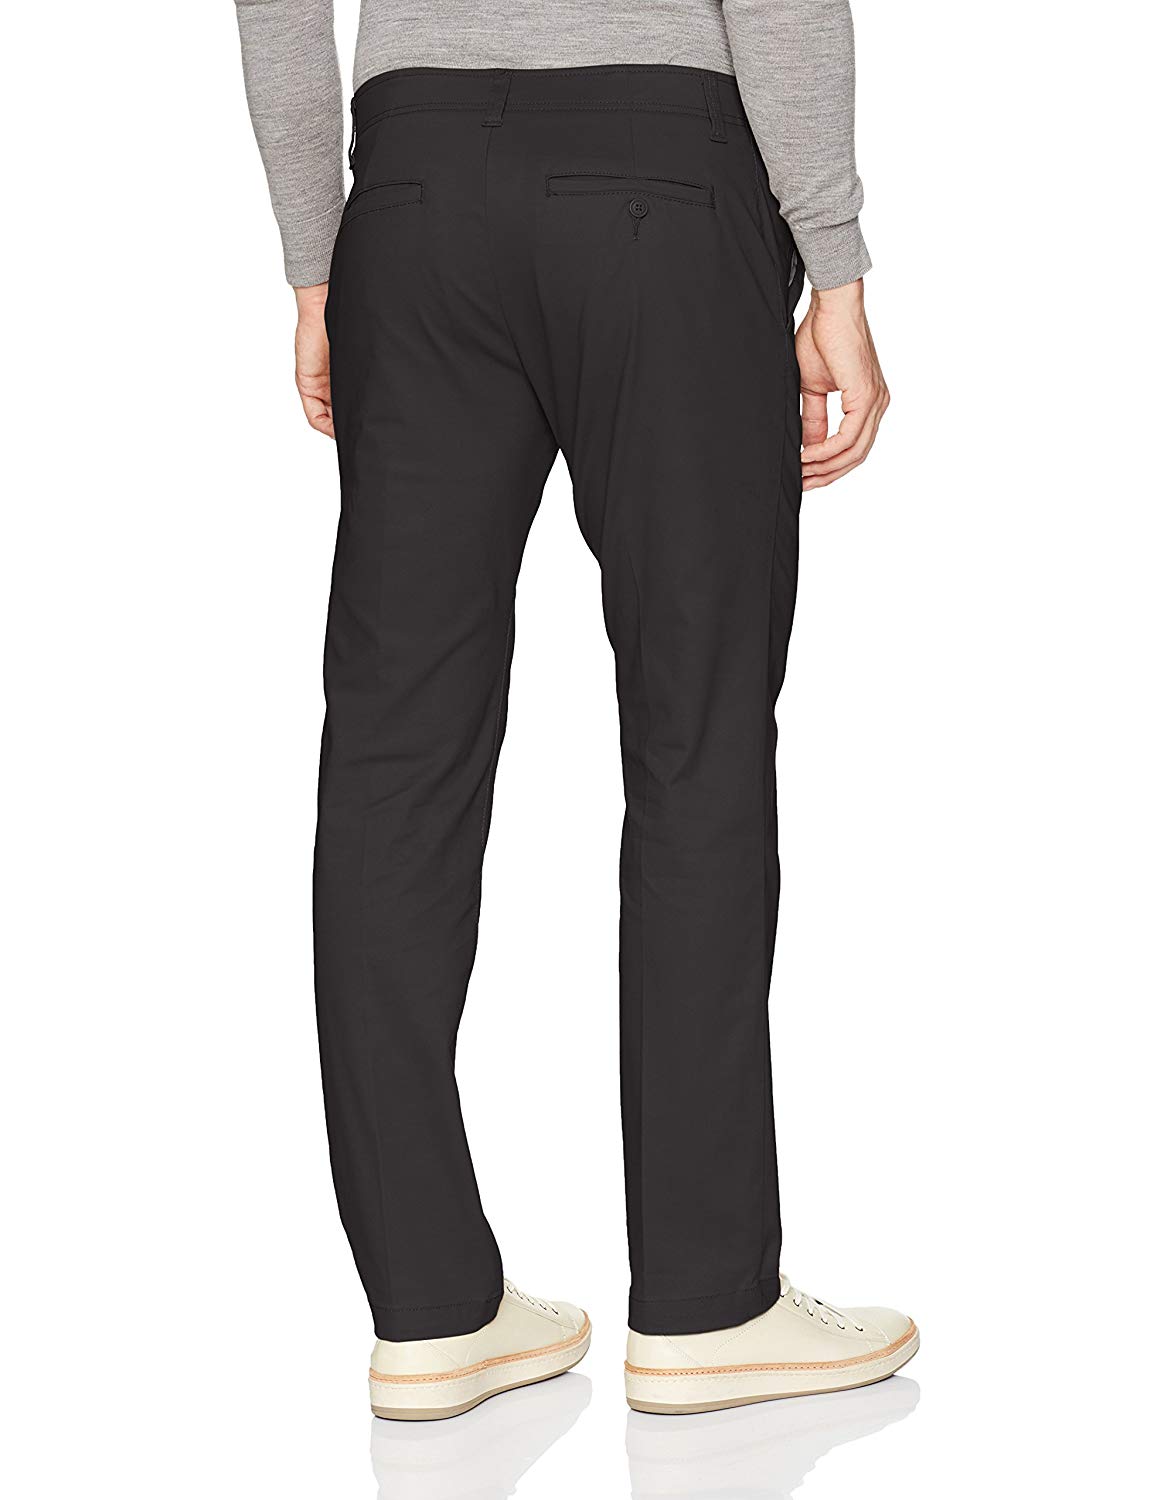 LEE Men's Performance Series Extreme Comfort Slim Pant,, Black, Size ...